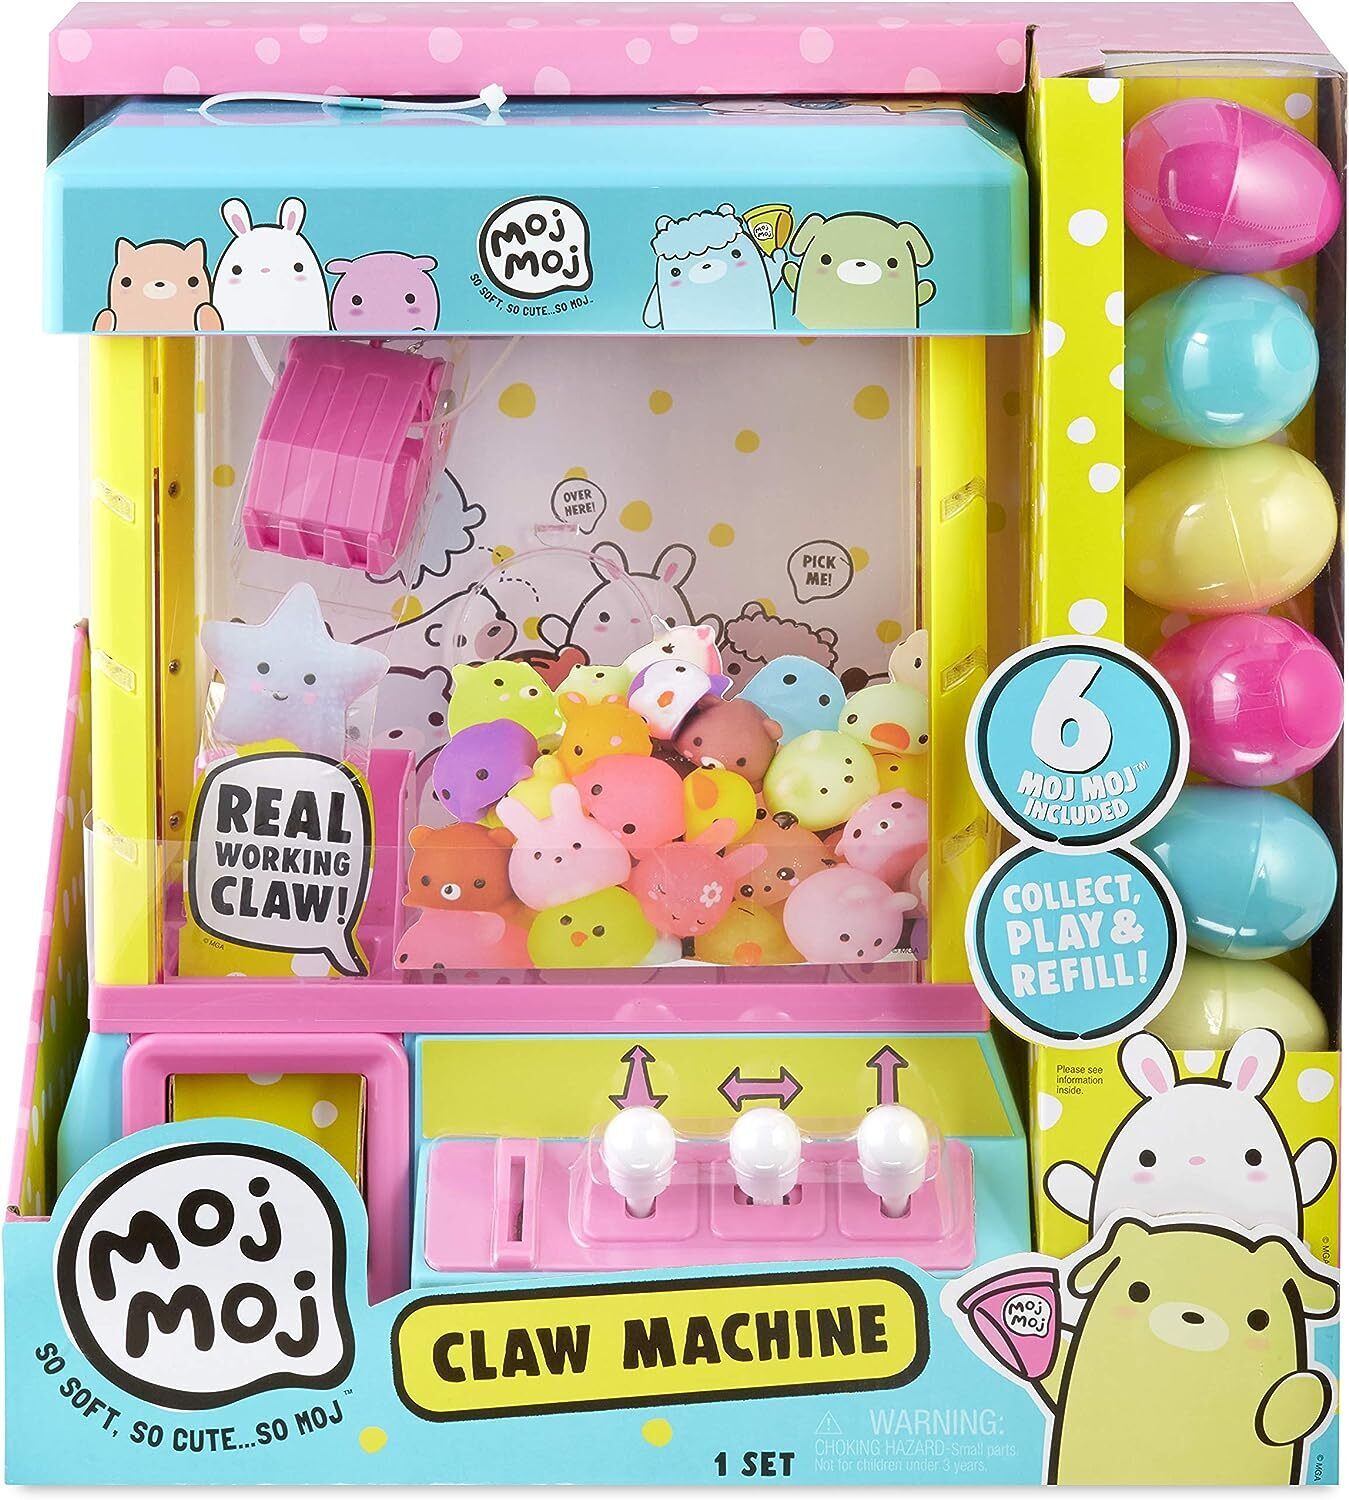 The Original Moj Moj Claw Machine Toy Set 3+